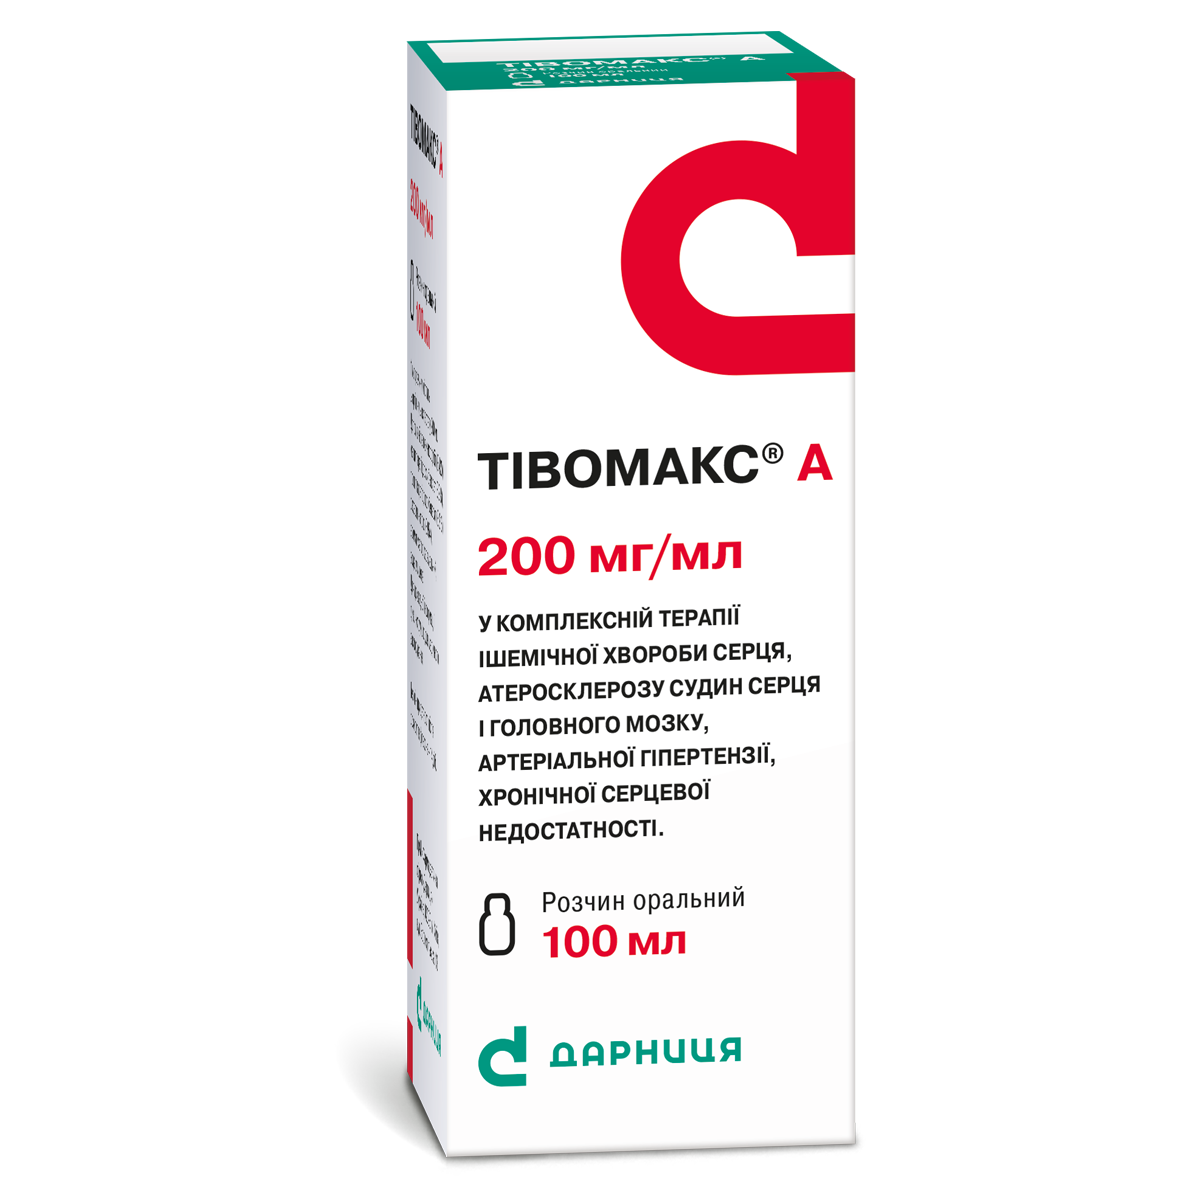 Tivomax A manufacturer "Darnytsia" pharmaceutical company